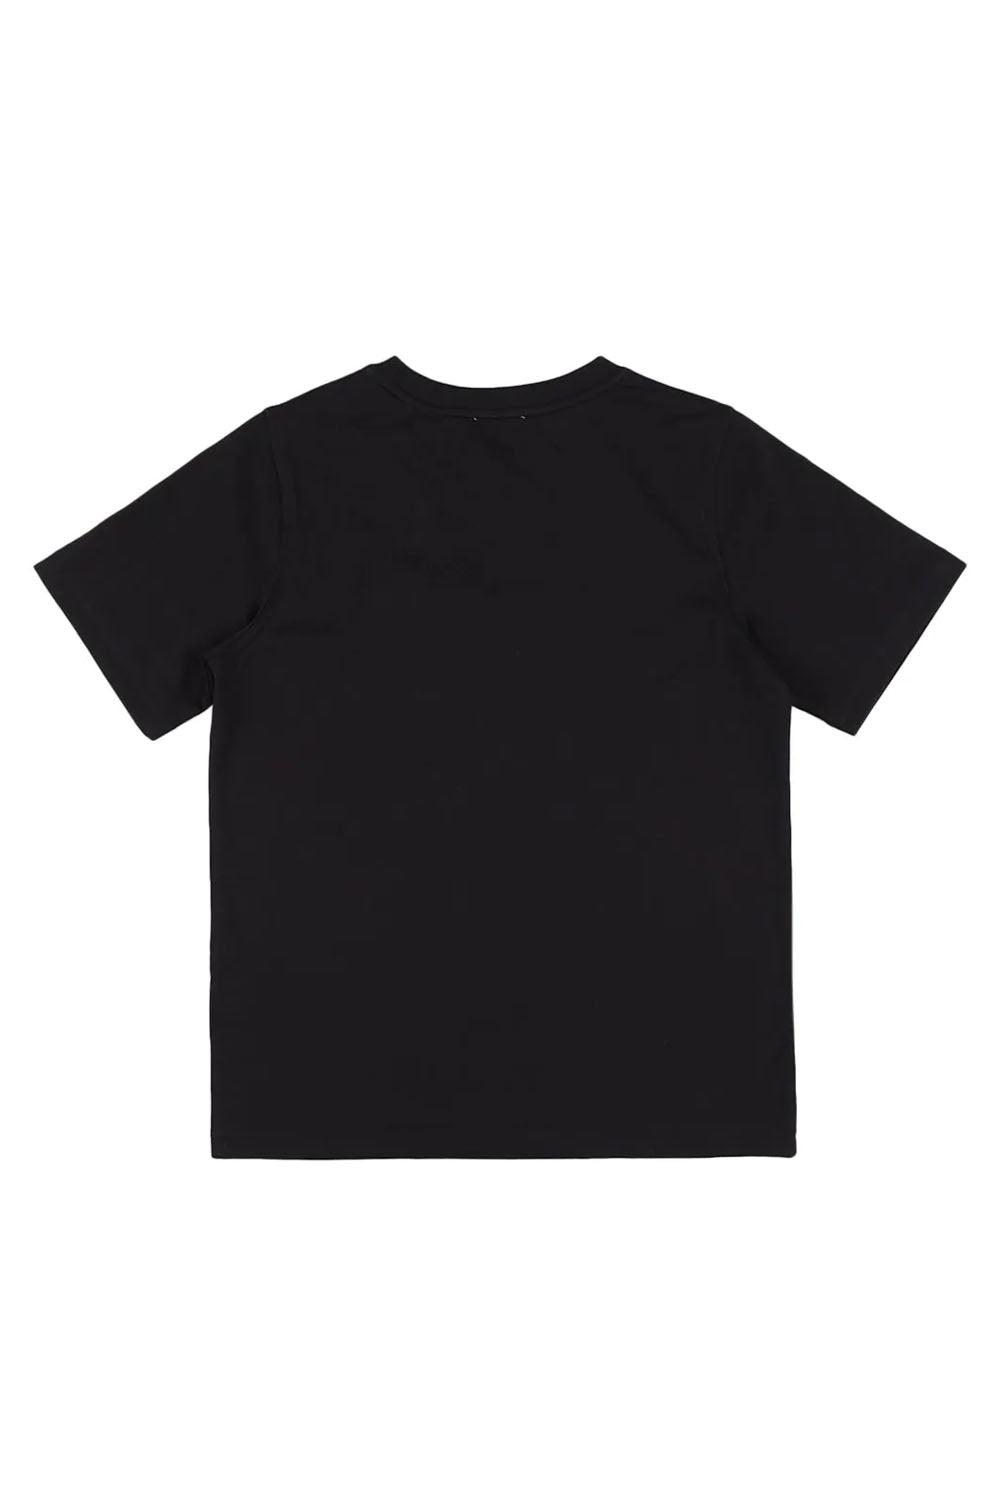 Jerseywear EKD T-shirt for Boys - Maison7